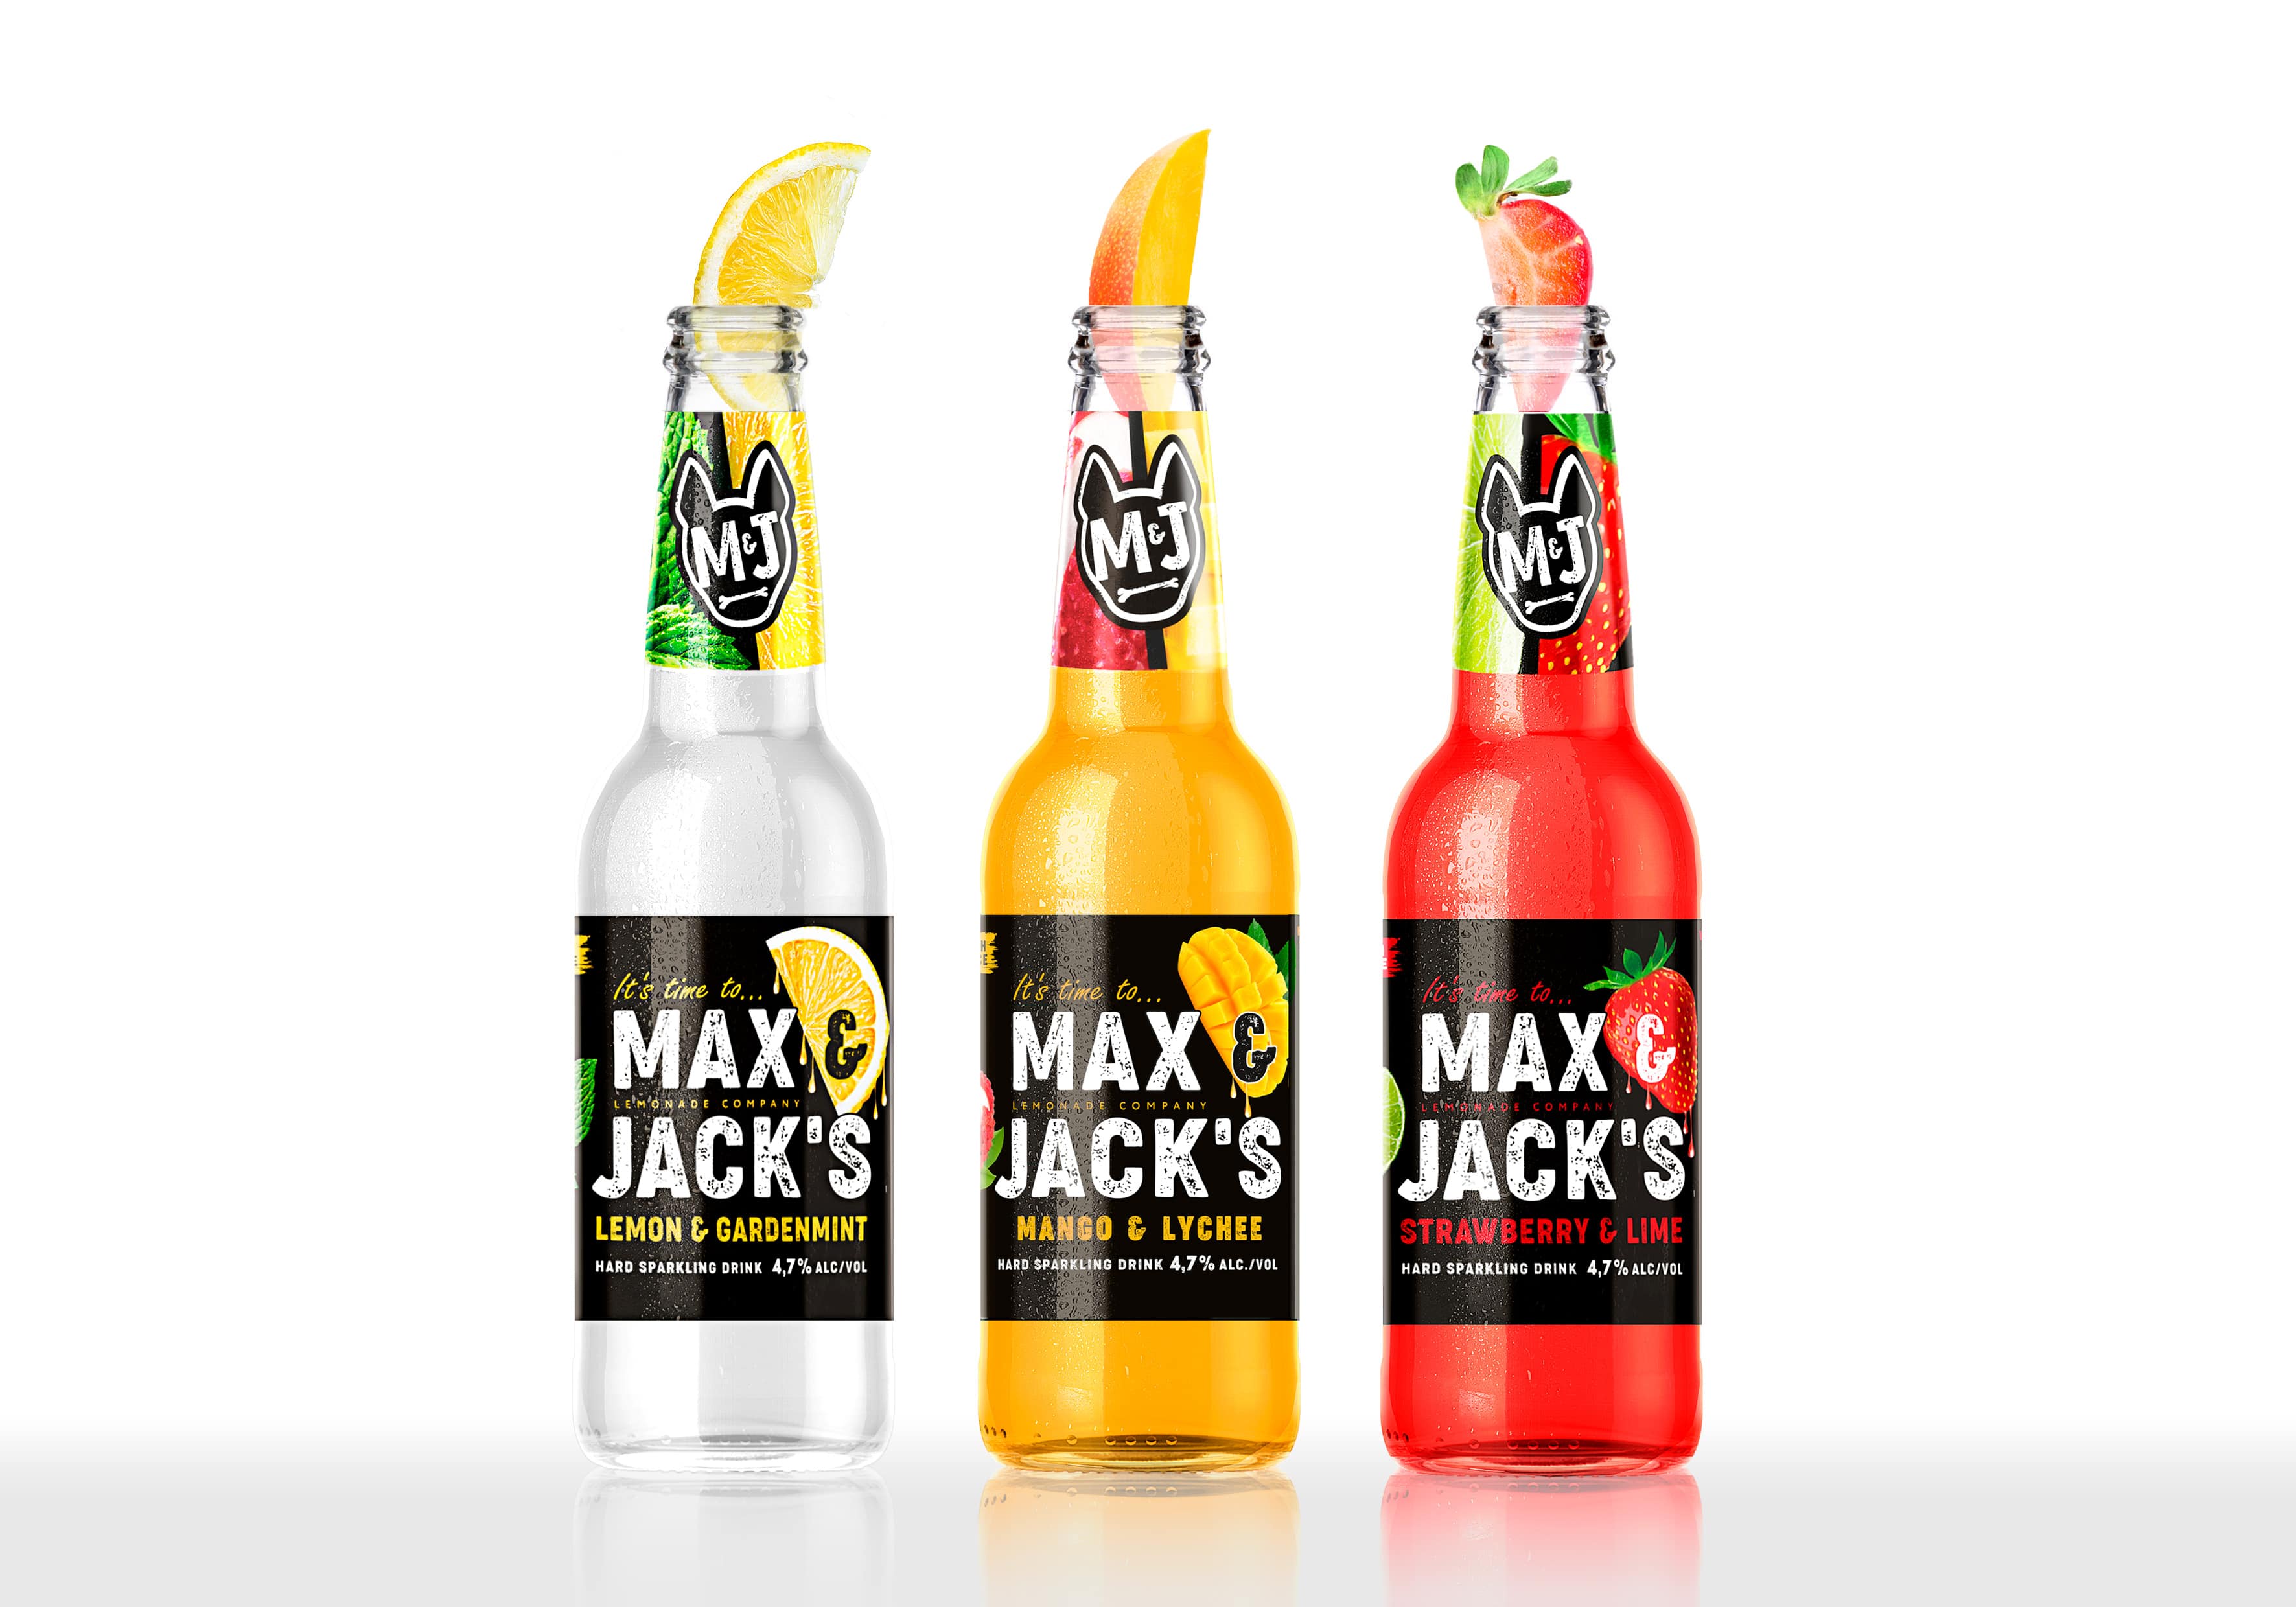 Max&Jack’s Hard Lemonade Branding and Packaging Design